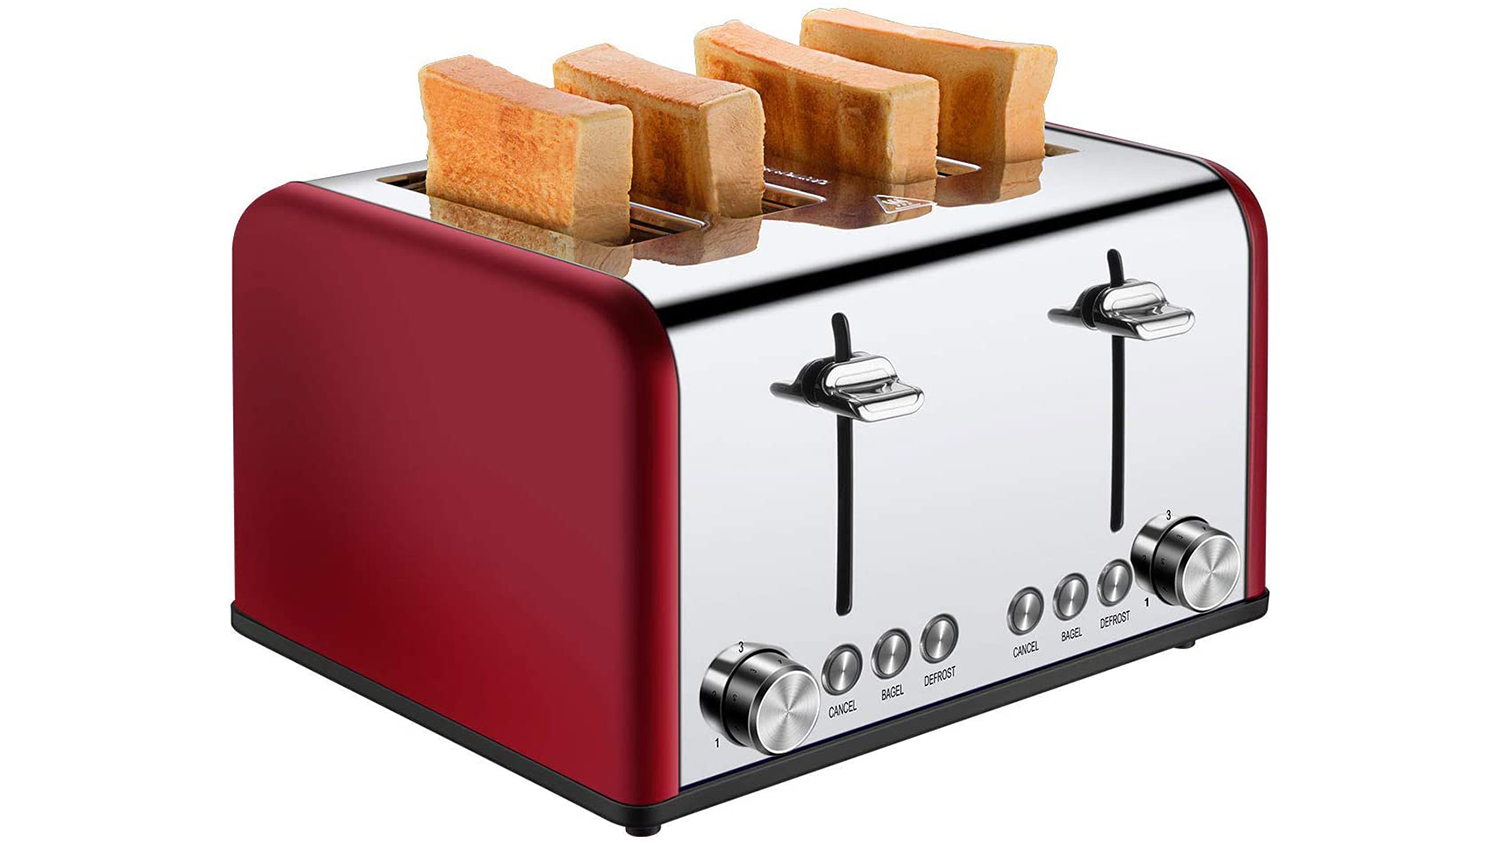 https://www.firstforwomen.com/wp-content/uploads/sites/2/2019/10/cuisibox-4-slice-toaster.jpg